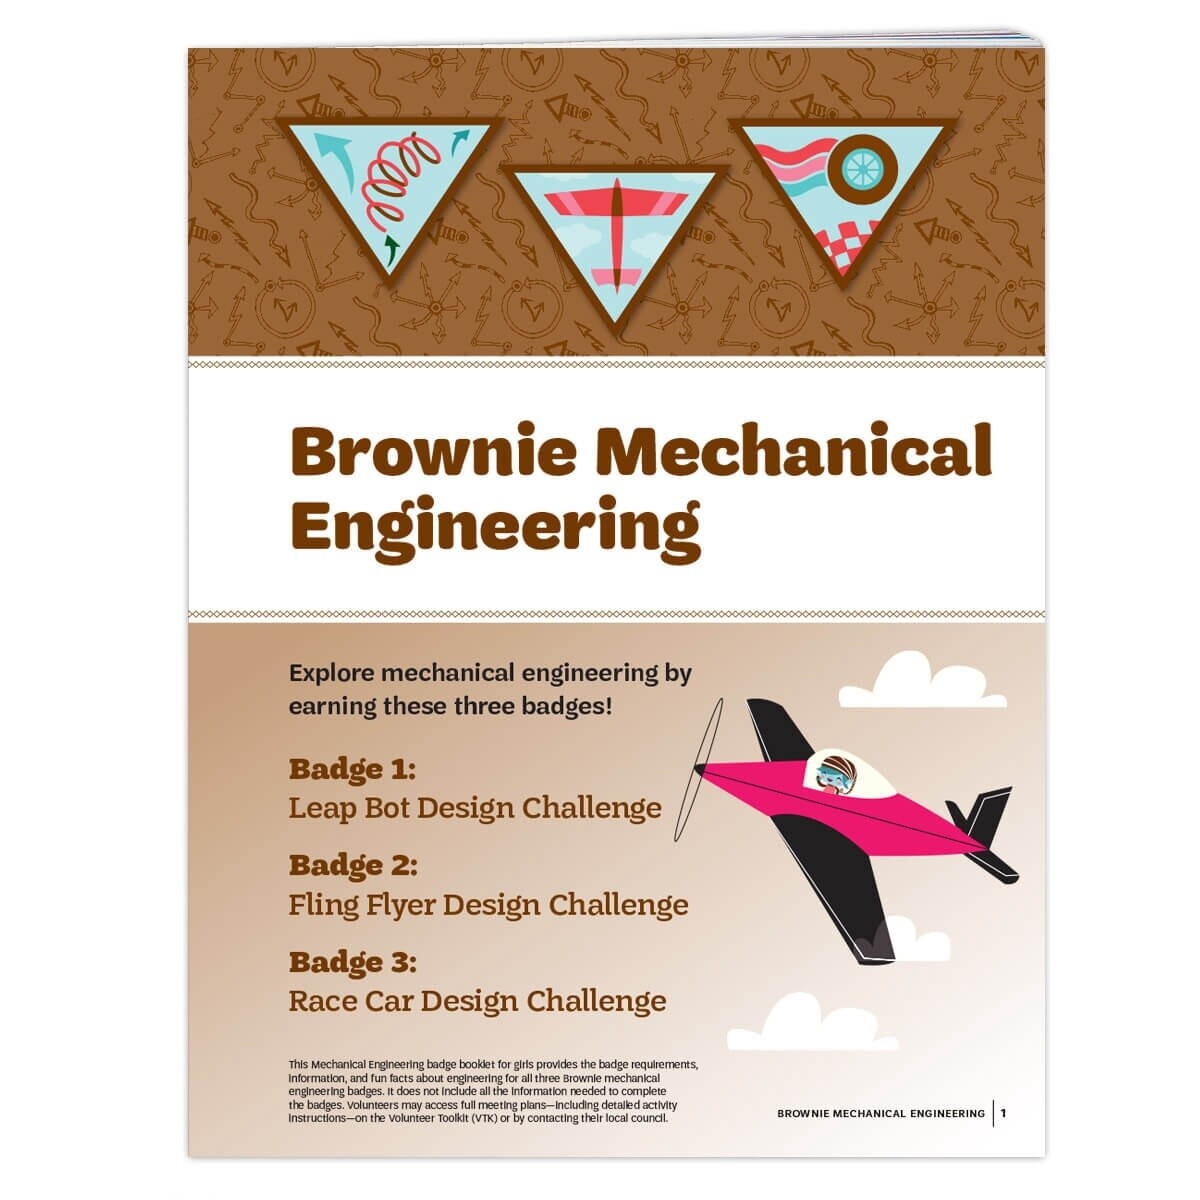 Brownie Mechanical Engineering Badge Requirements